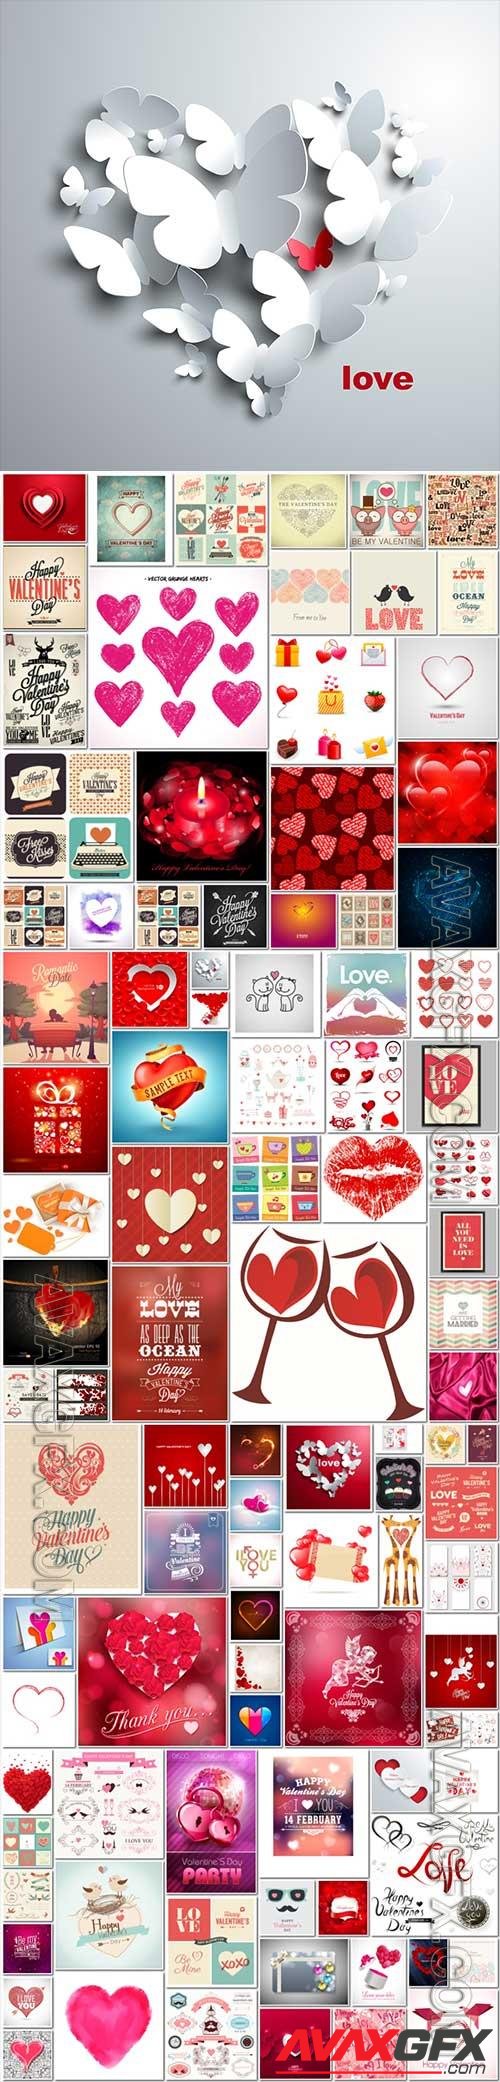 100 Bundle Happy Valentines Day, love, romance, hearts in vector vol 15